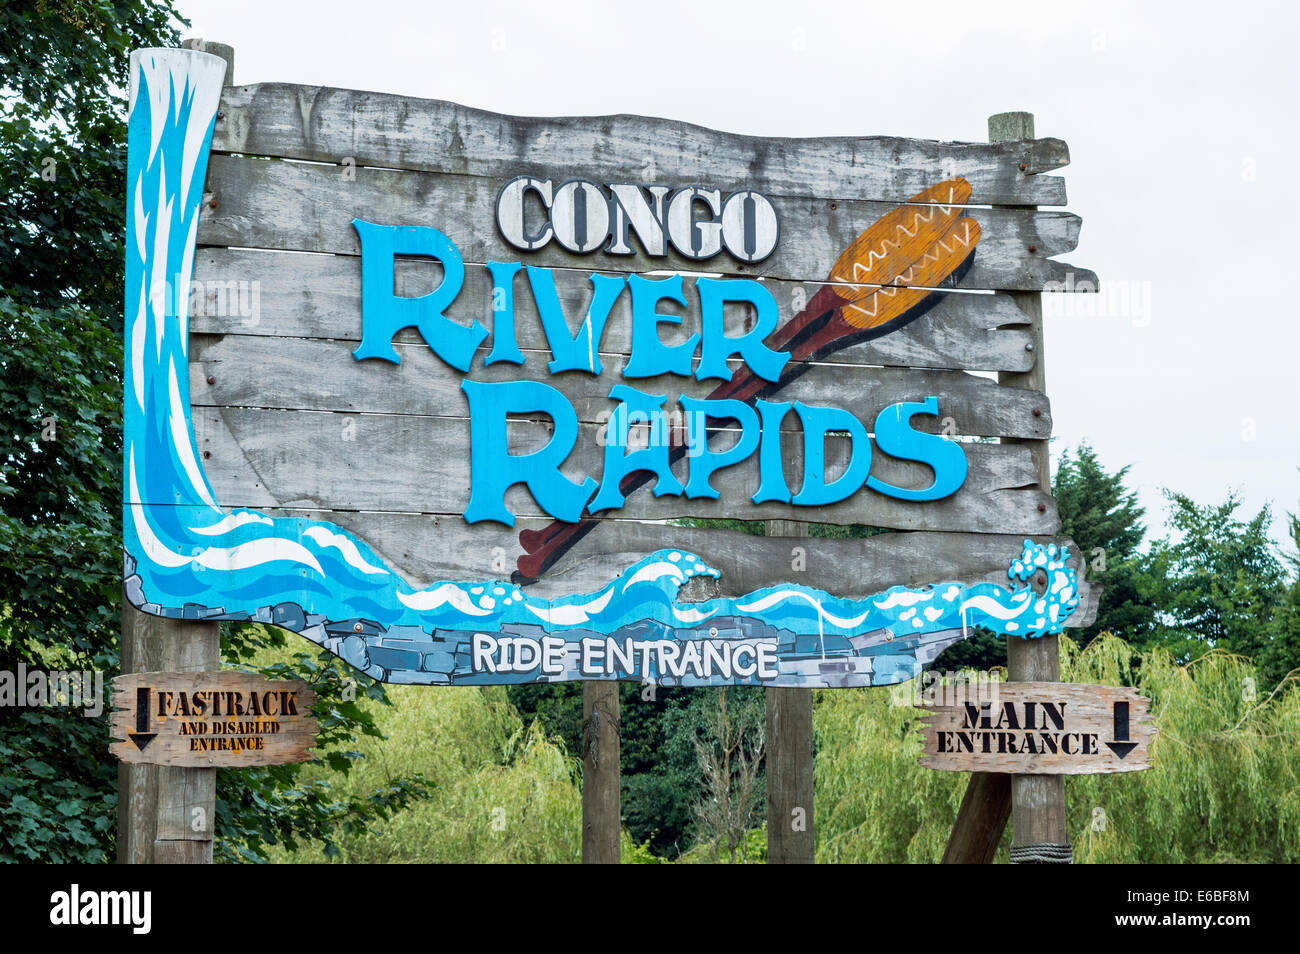 Congo River Rapids theme park ride sign at Alton Towers resort Stock Photo